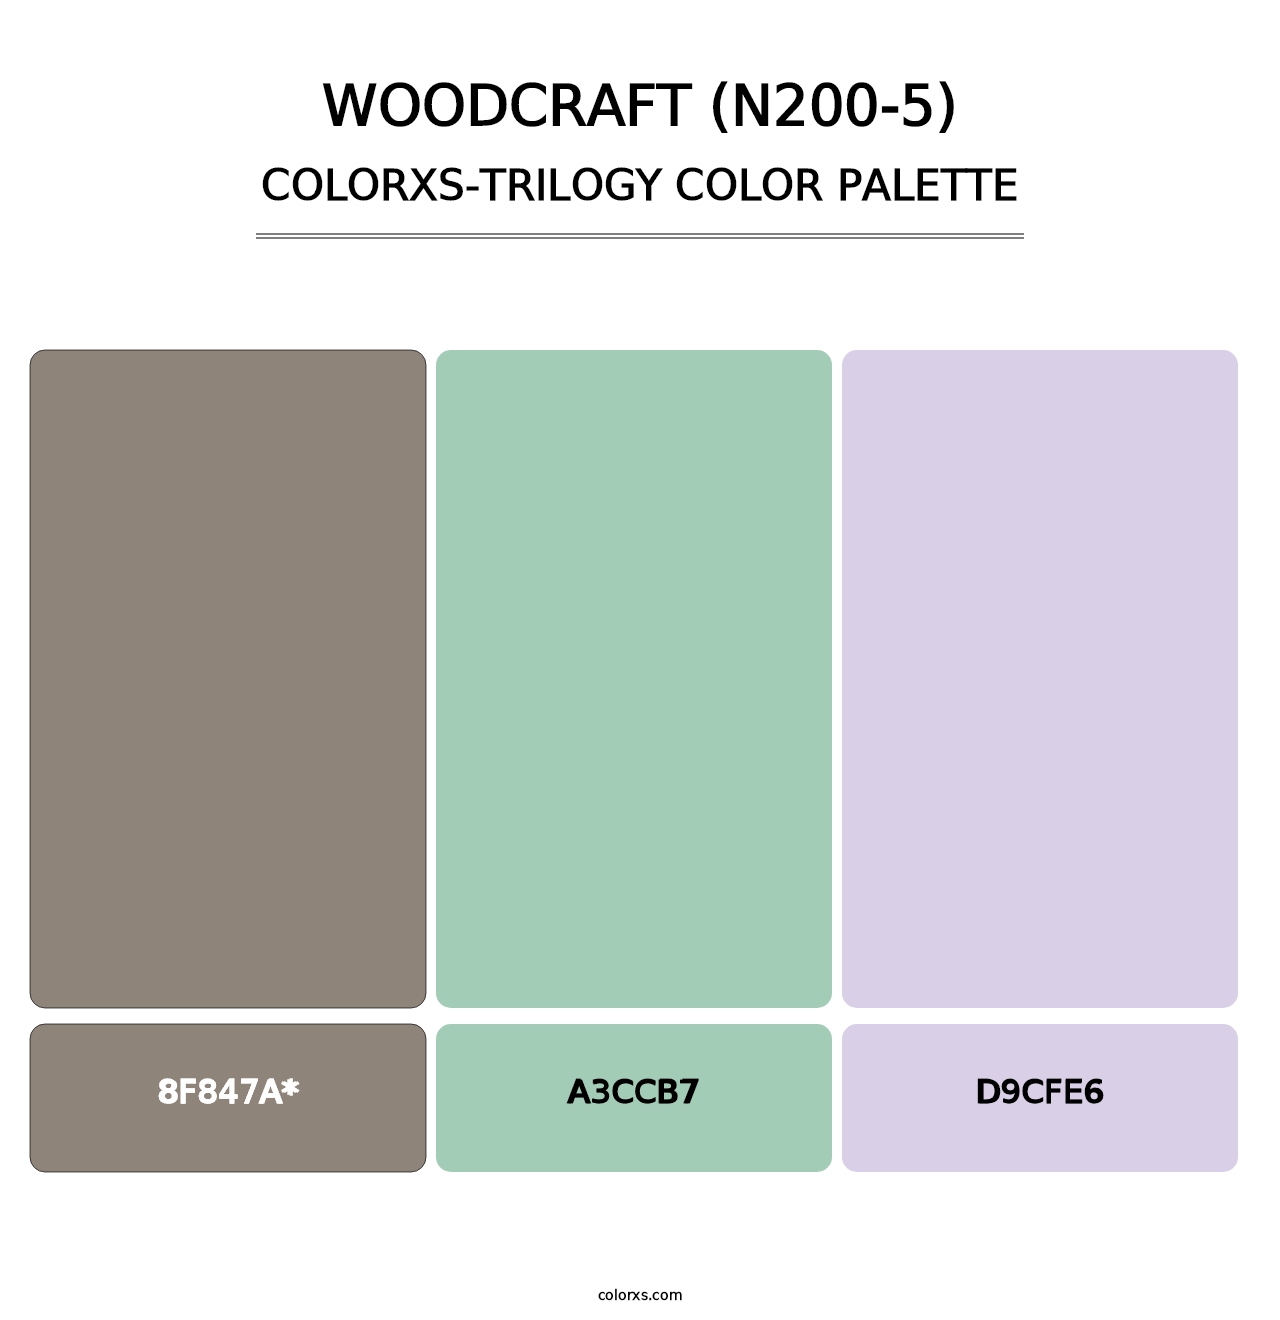 Woodcraft (N200-5) - Colorxs Trilogy Palette